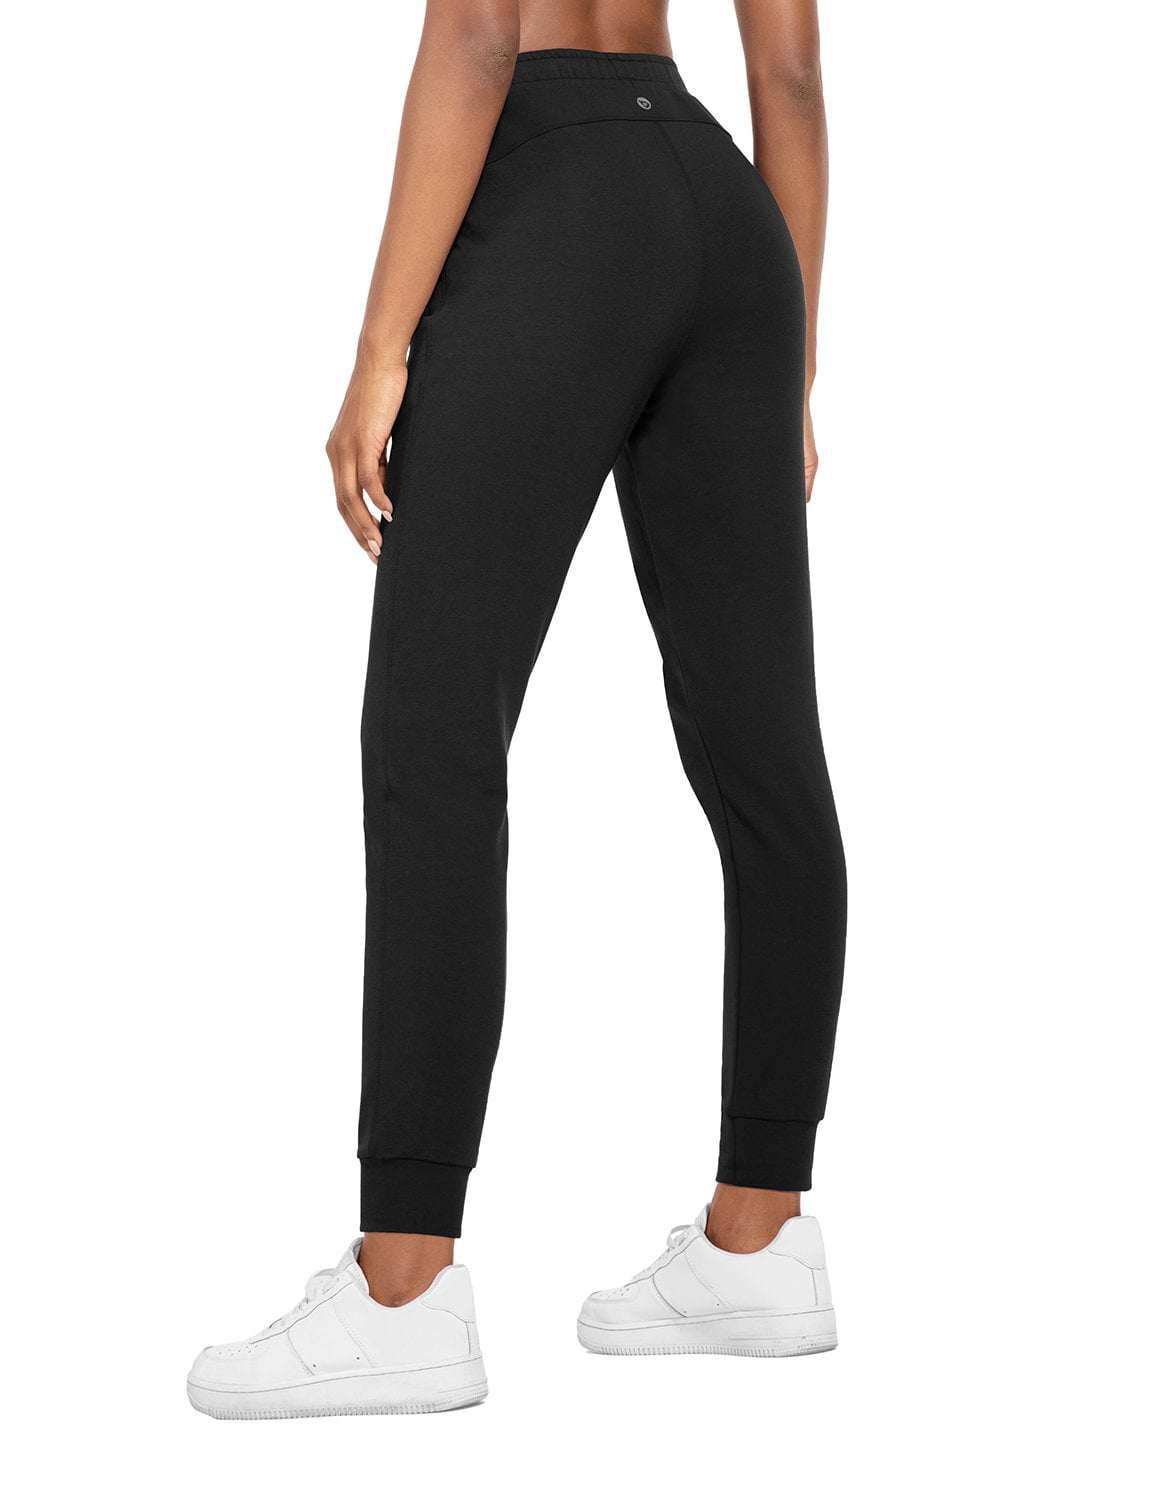 Reebok Training Supply Slim Jogger Women's Almost Grey Black Athleticwear Tights